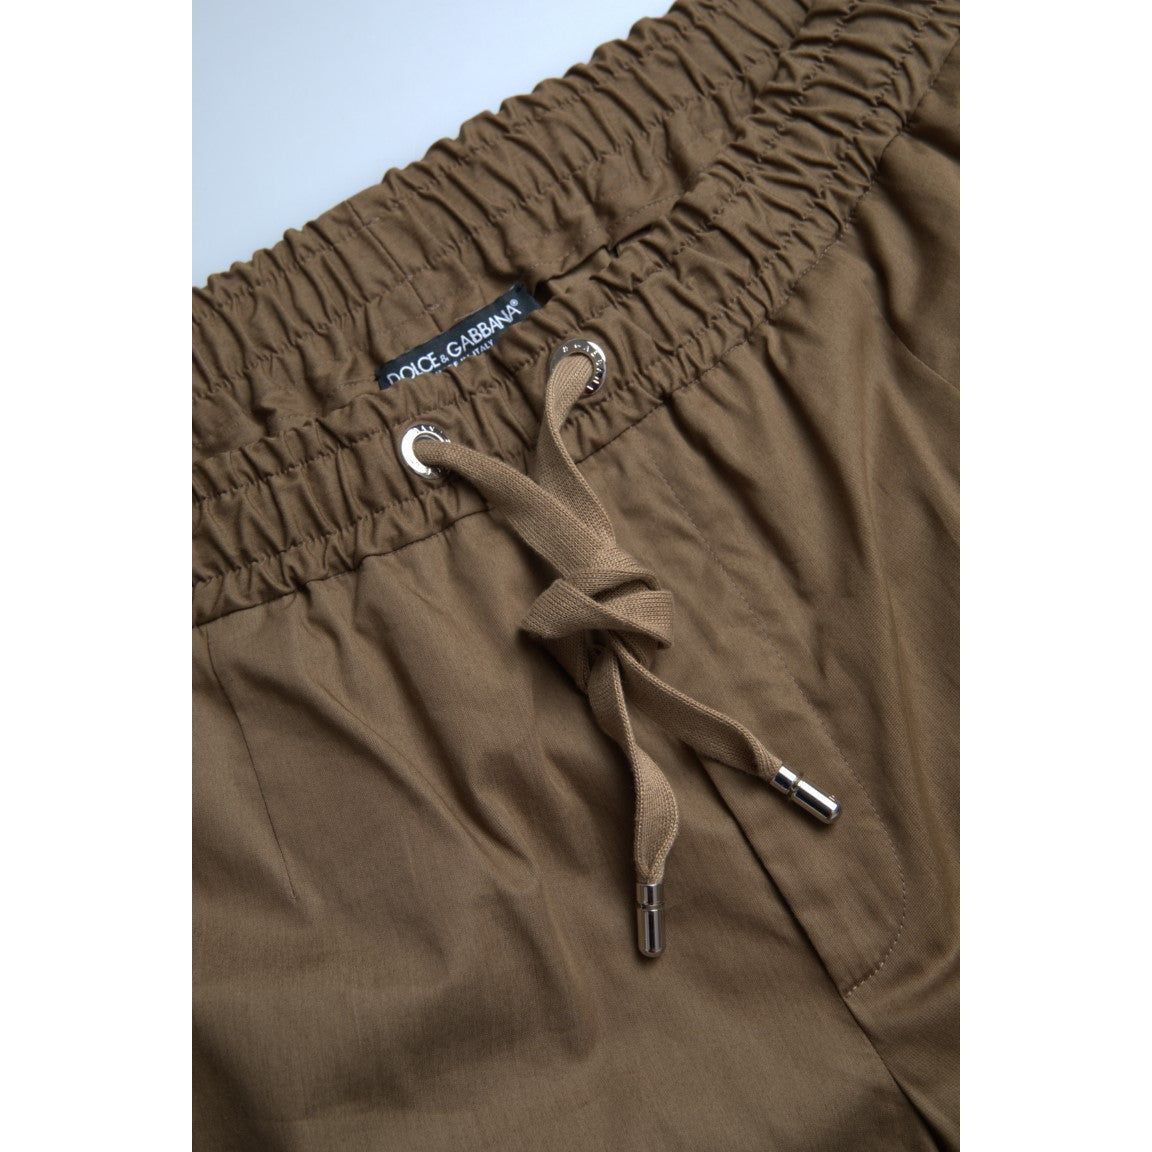 Dolce & Gabbana Elegant Brown Silk Blend Taormina Suit brown-2-piece-single-breasted-taormina-suit 465A8685-Medium-3981e11d-14c.jpg